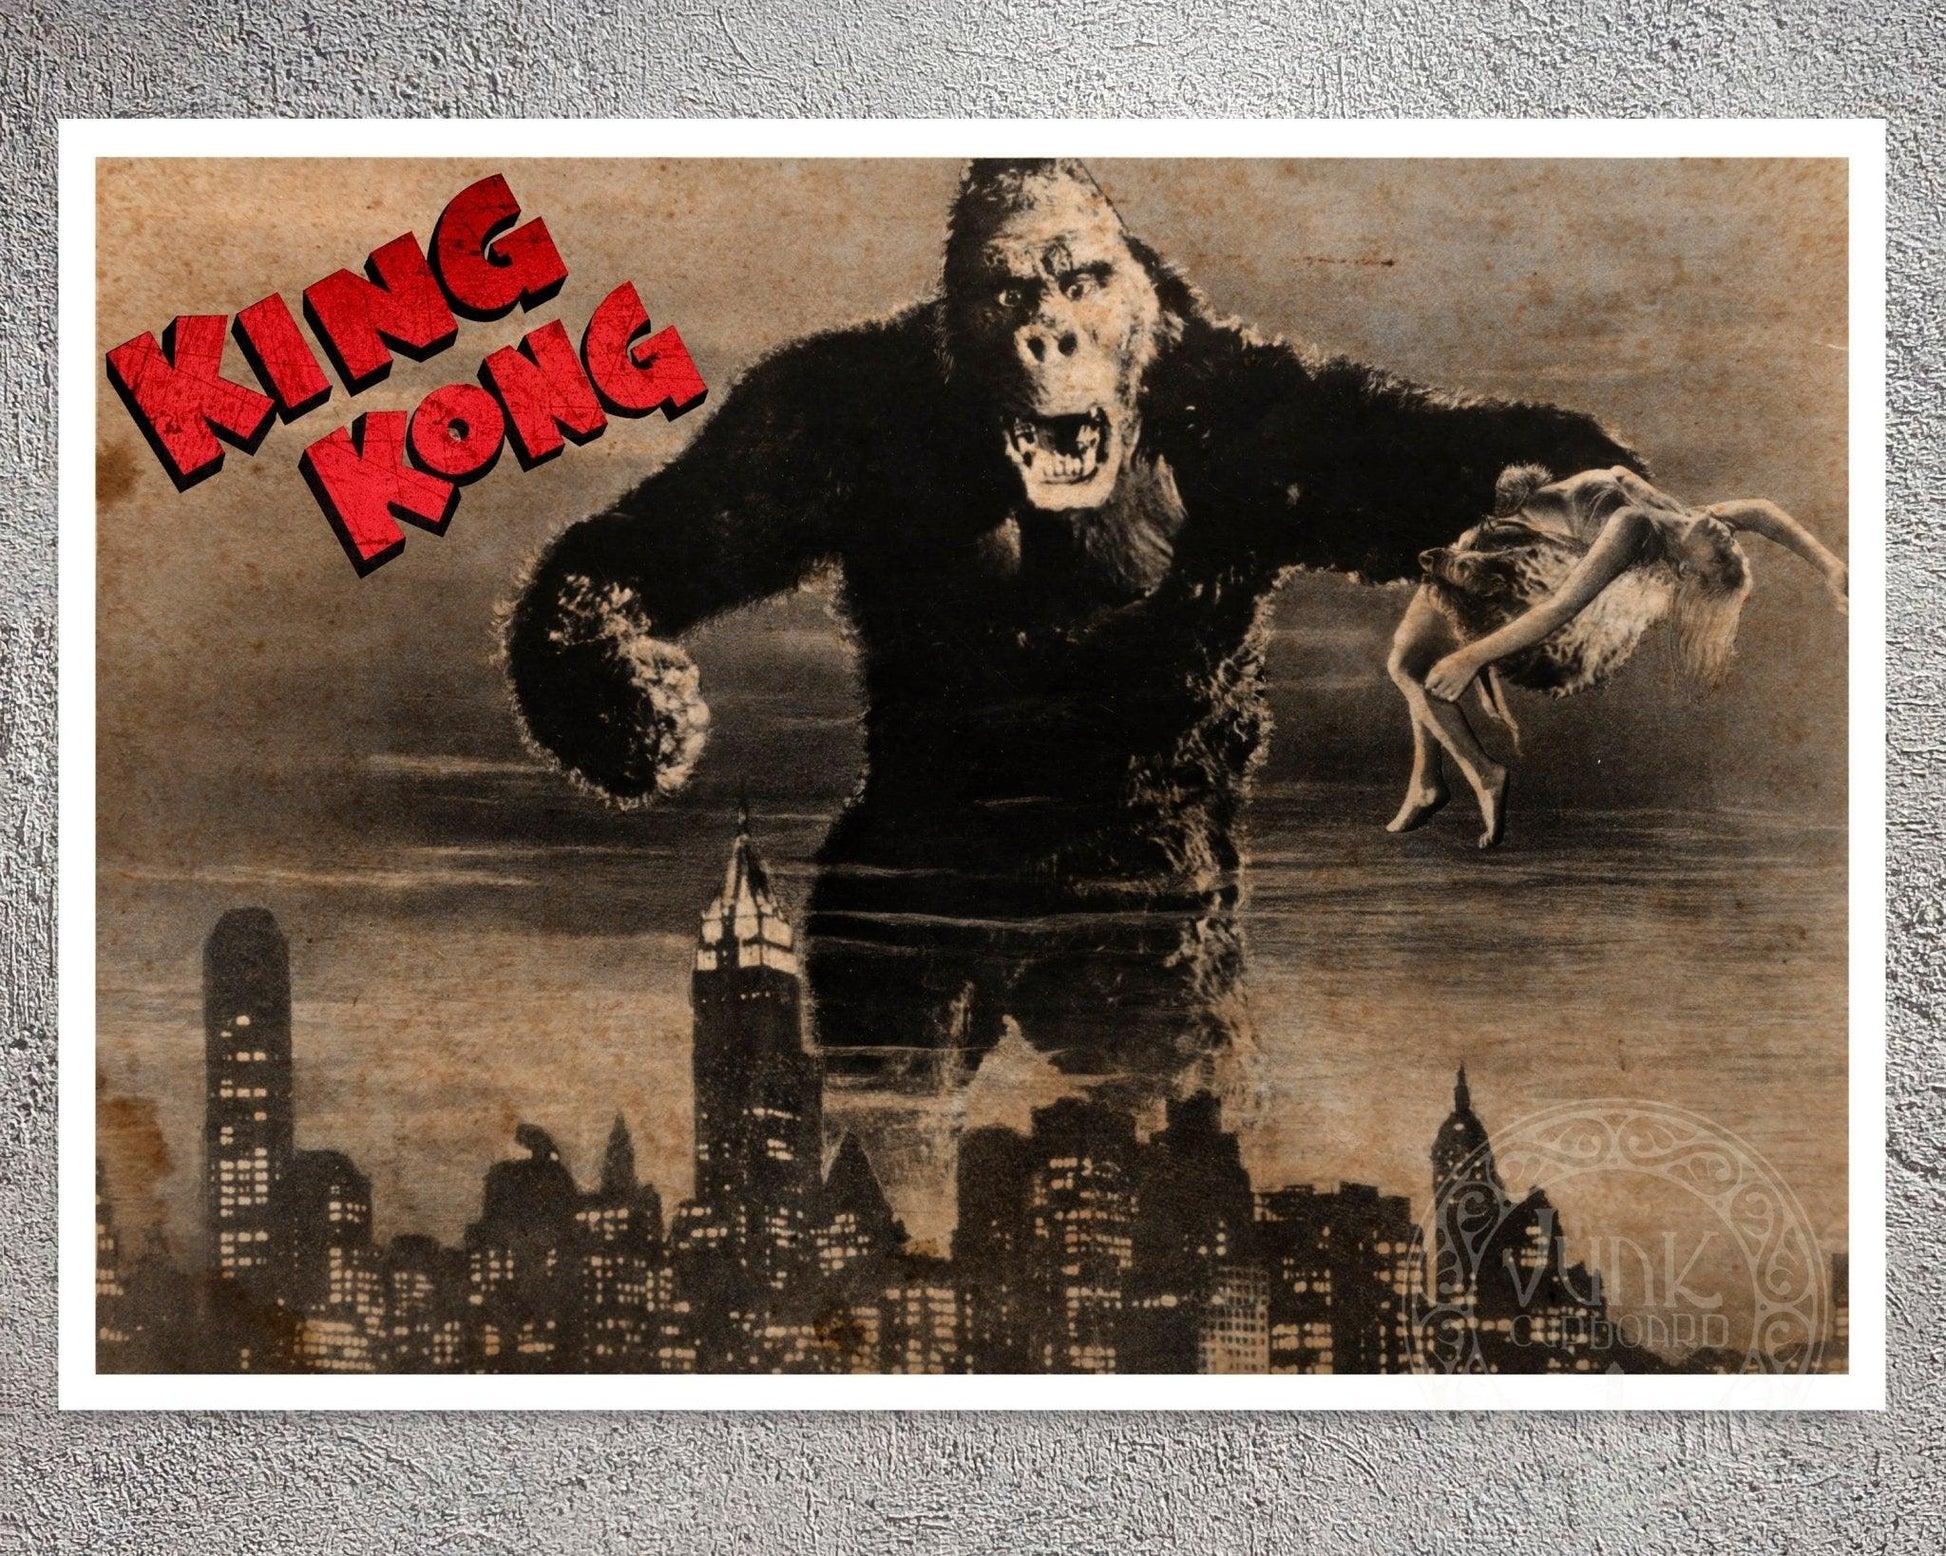 Vintage Movie Poster "King Kong" (c.1933) - Mabon Gallery